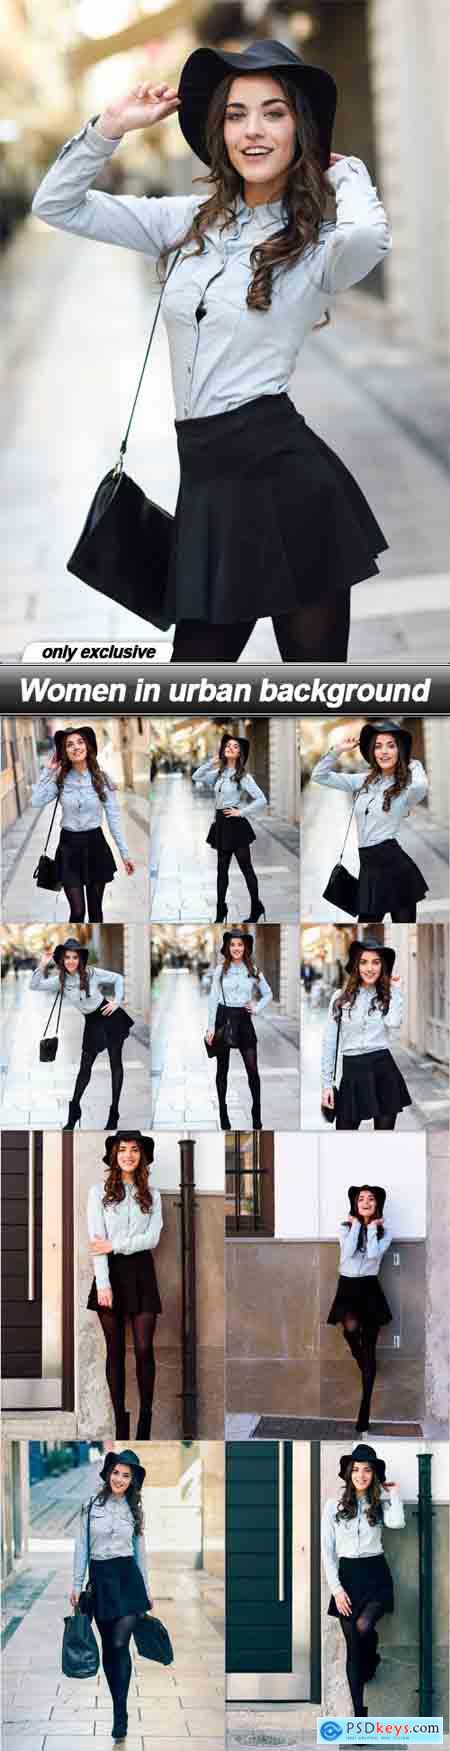 Women in urban background - 10 UHQ JPEG